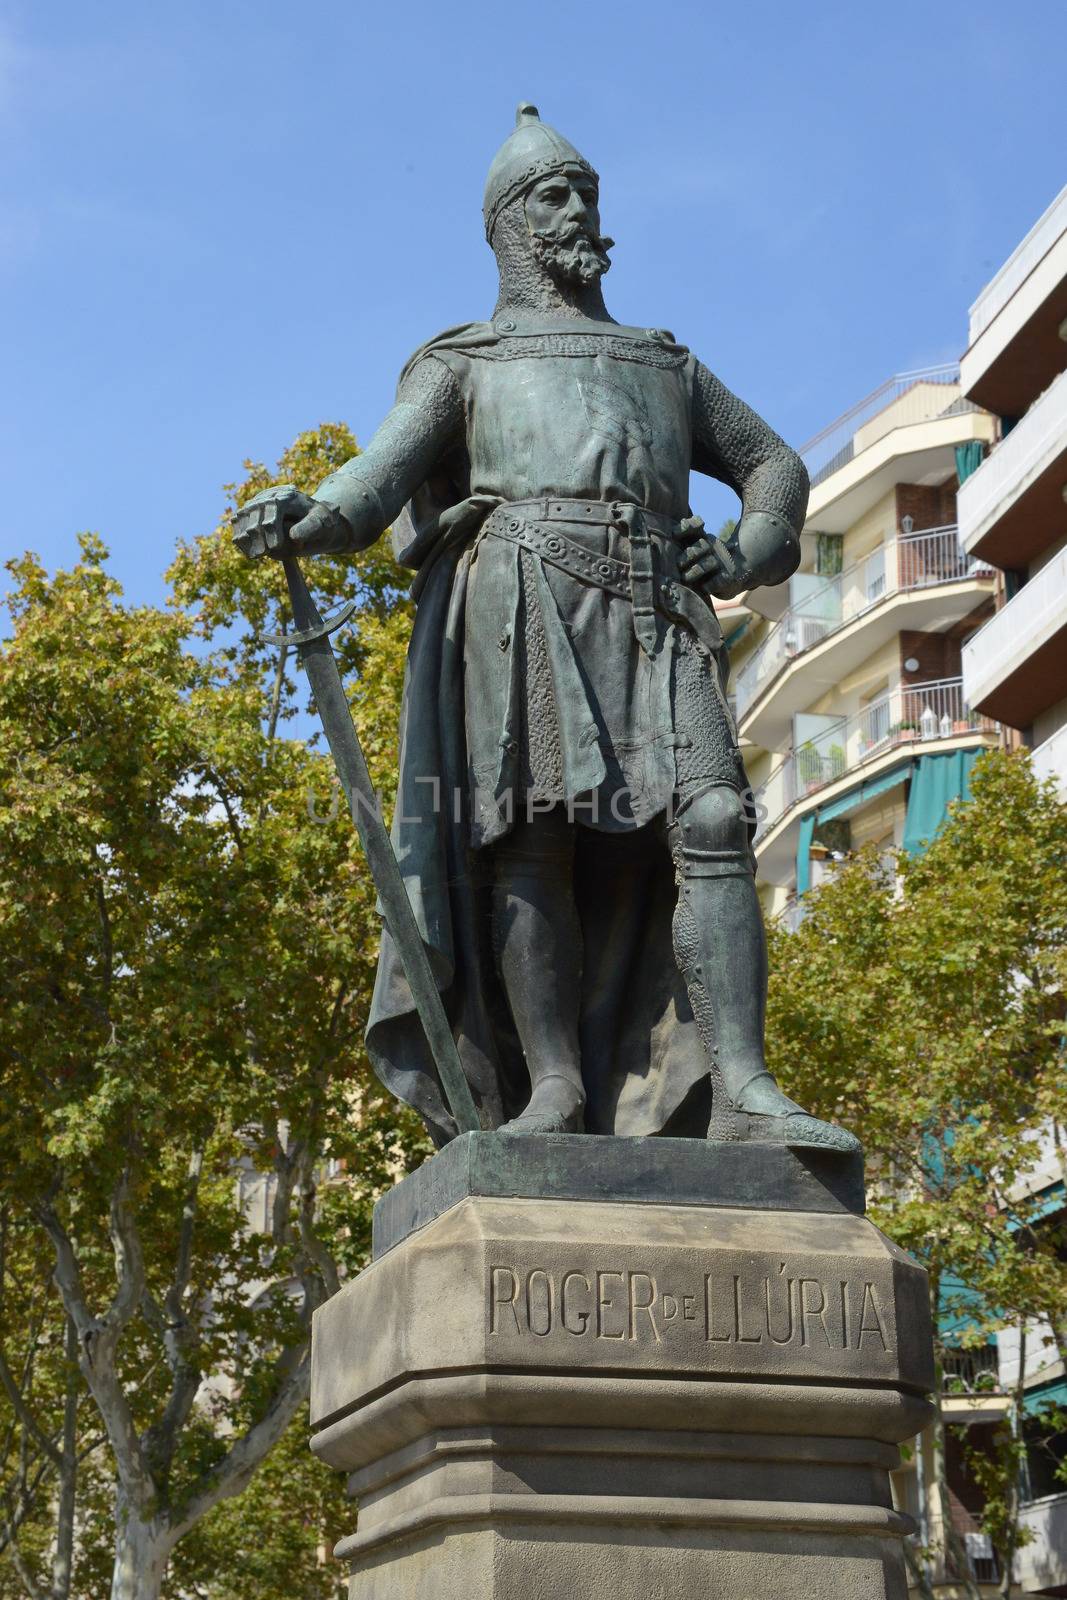 Statue of Roger de Lluria by gorilla